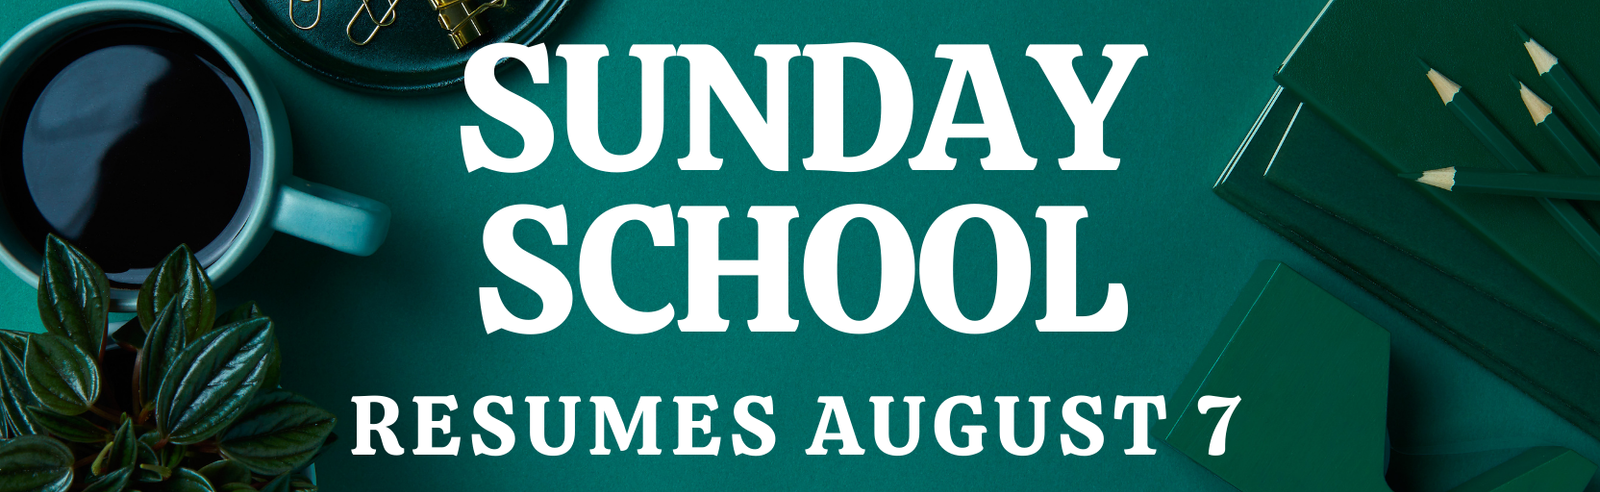 June Sunday School sign